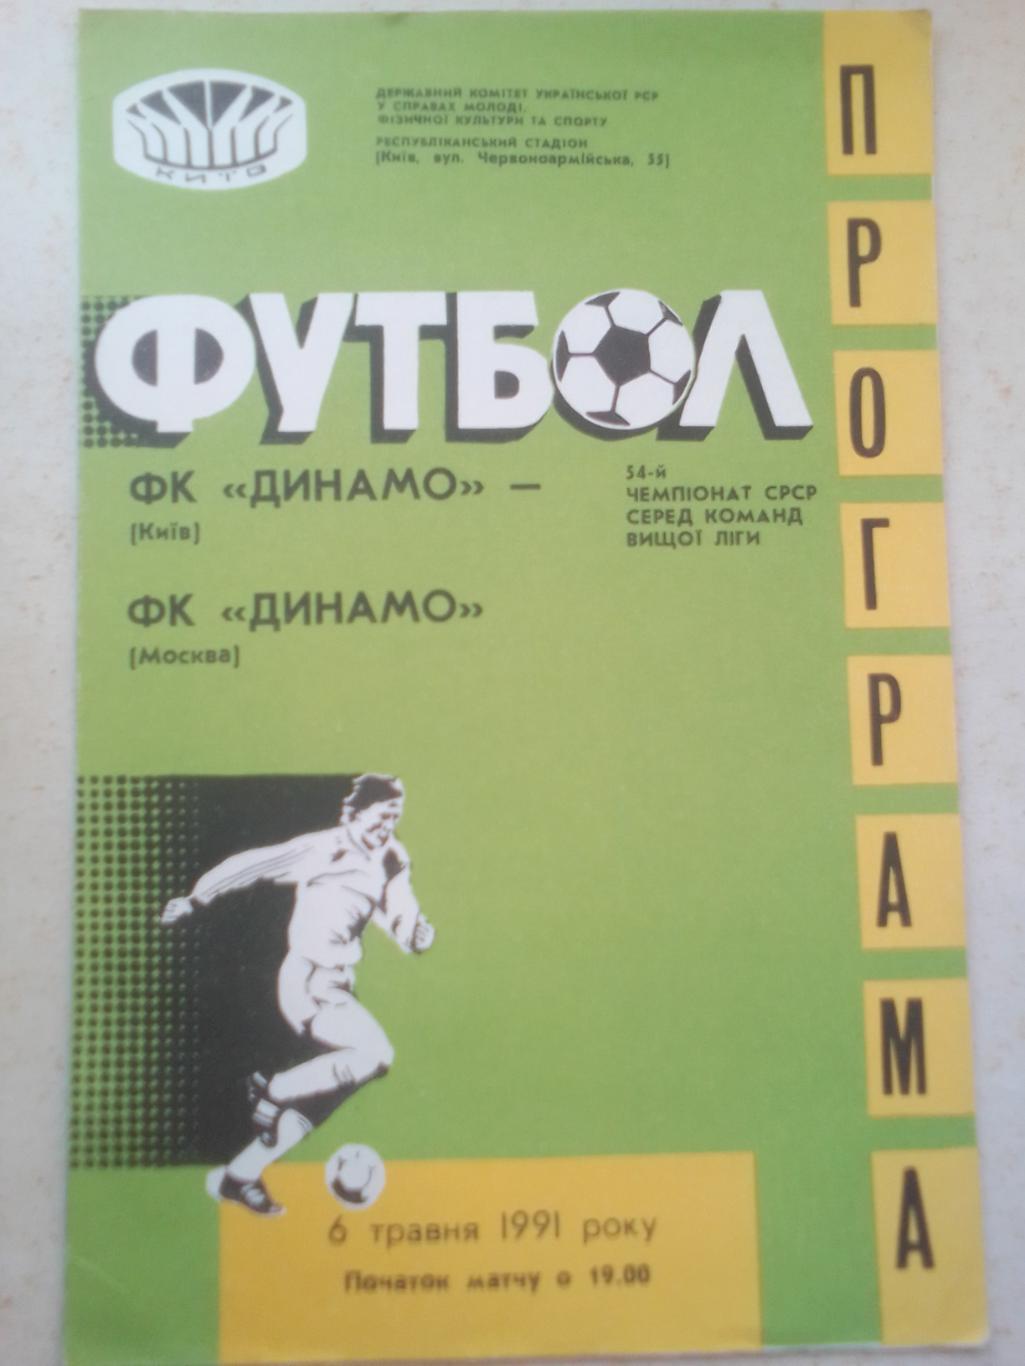 Динамо Киев- Динамо Москва 6.05.91 г.